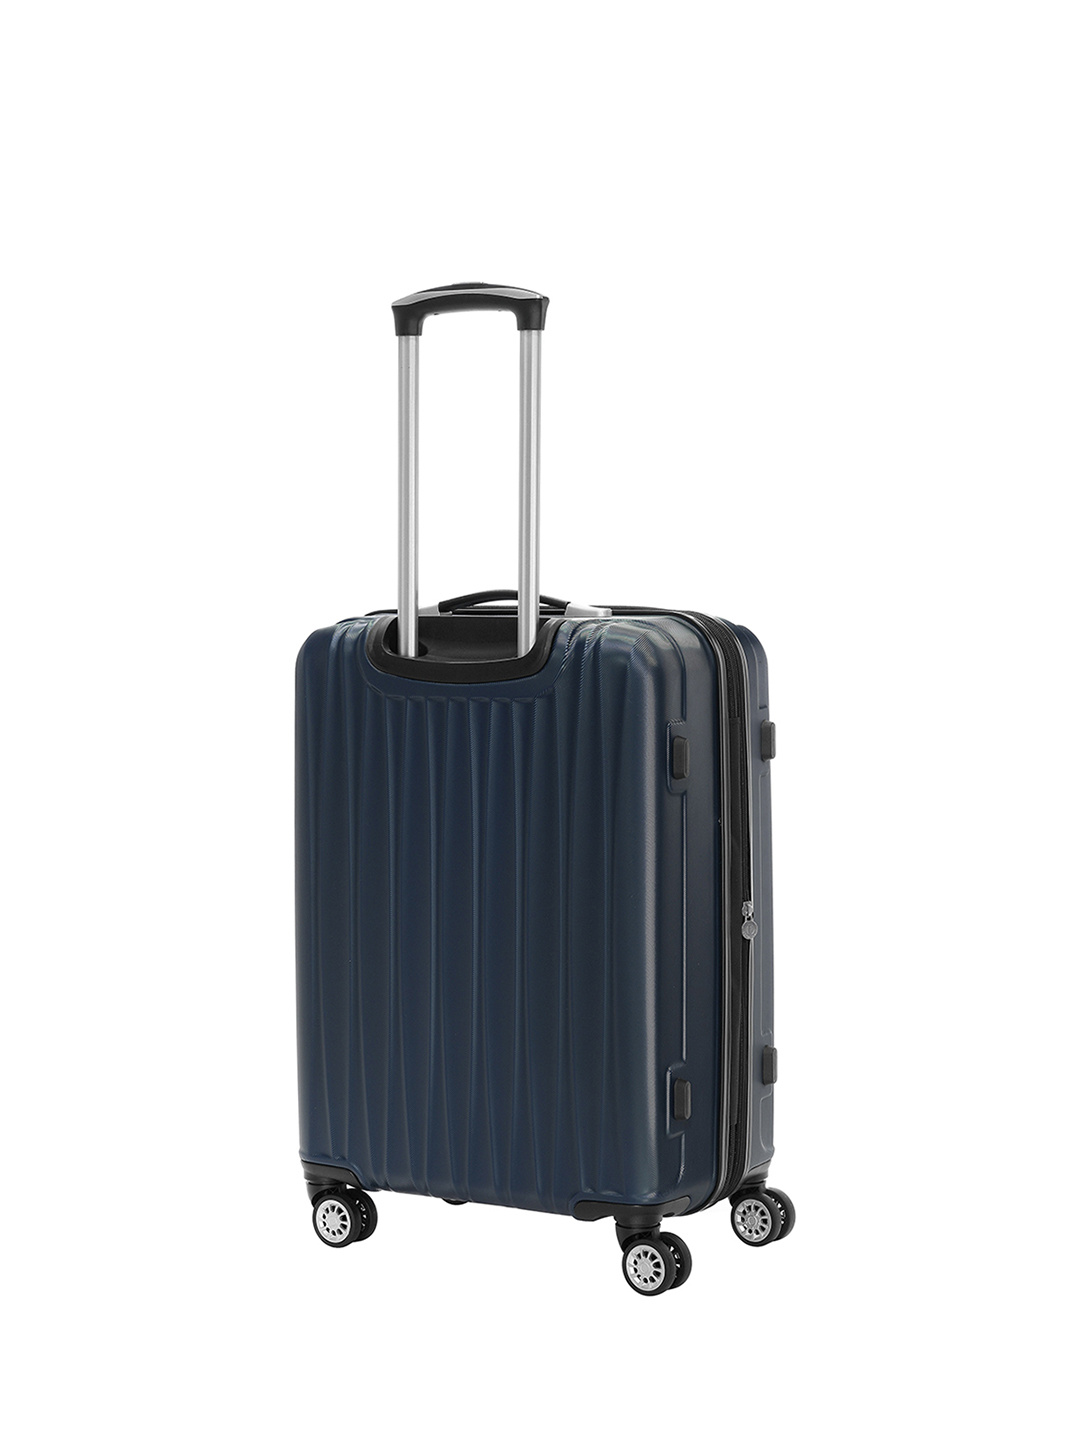 Фото Средний чемодан на колесах из рифленого ABS пластика синего цвета Чемоданы